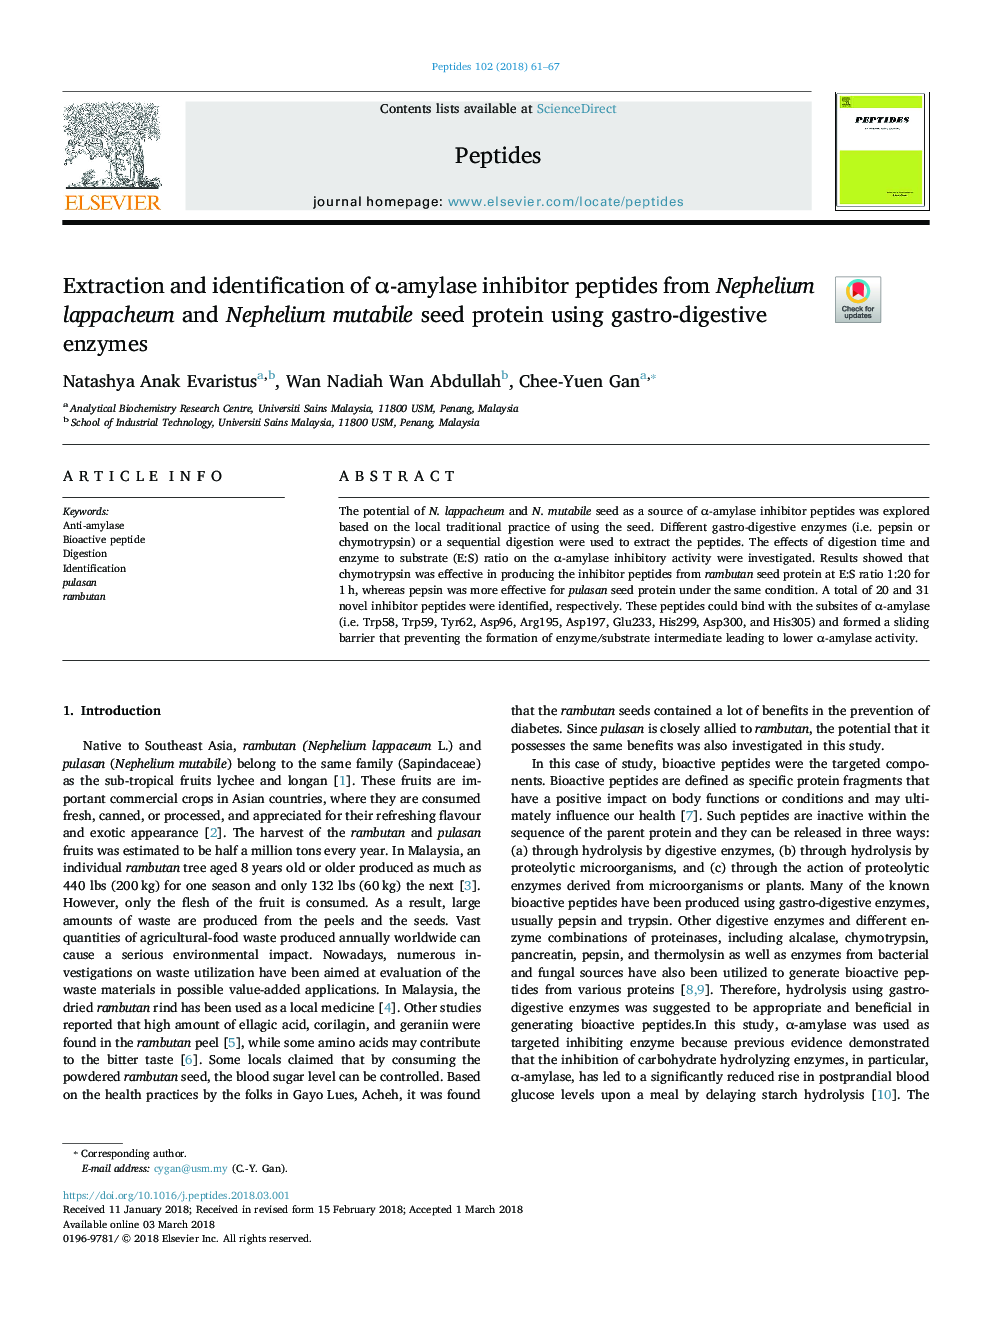 Extraction and identification of Î±-amylase inhibitor peptides from Nephelium lappacheum and Nephelium mutabile seed protein using gastro-digestive enzymes